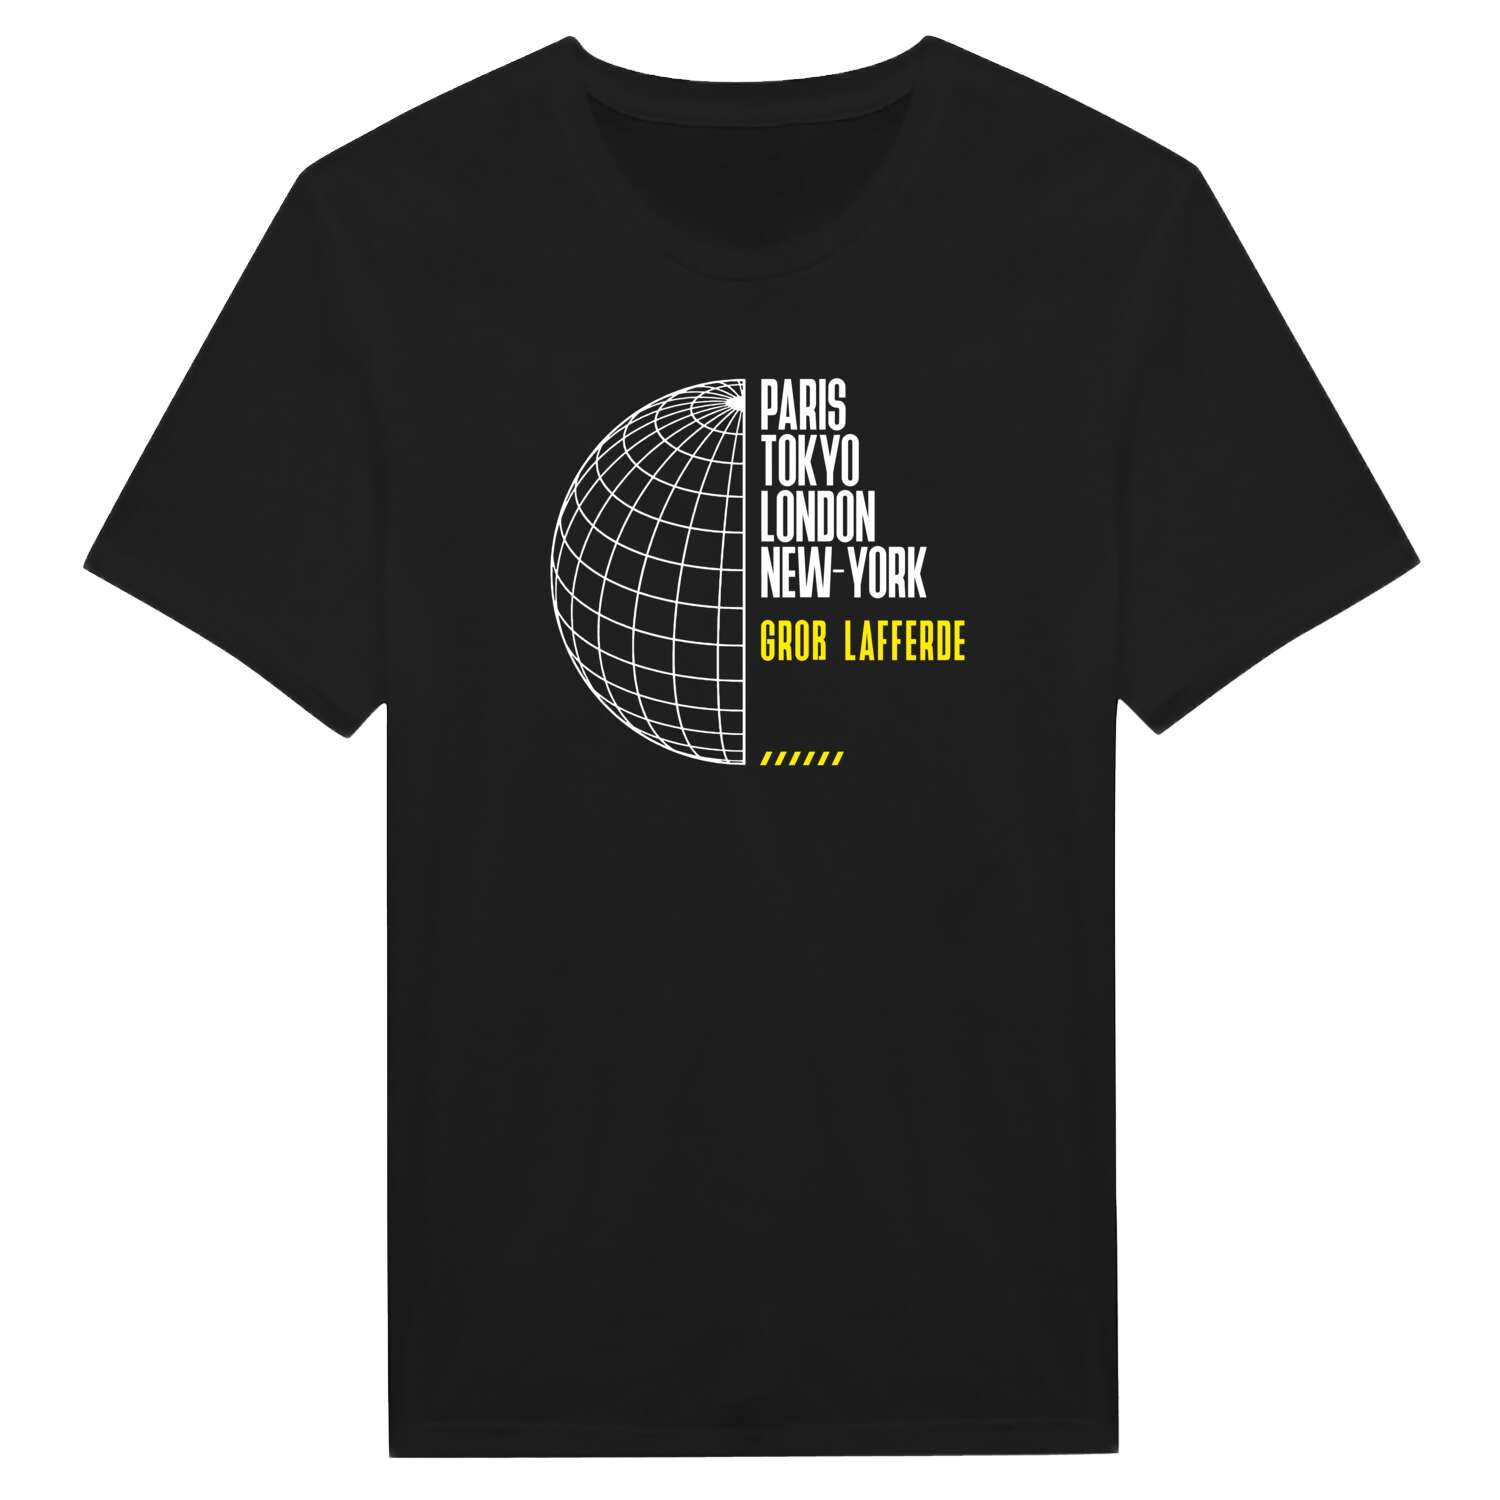 Groß Lafferde T-Shirt »Paris Tokyo London«